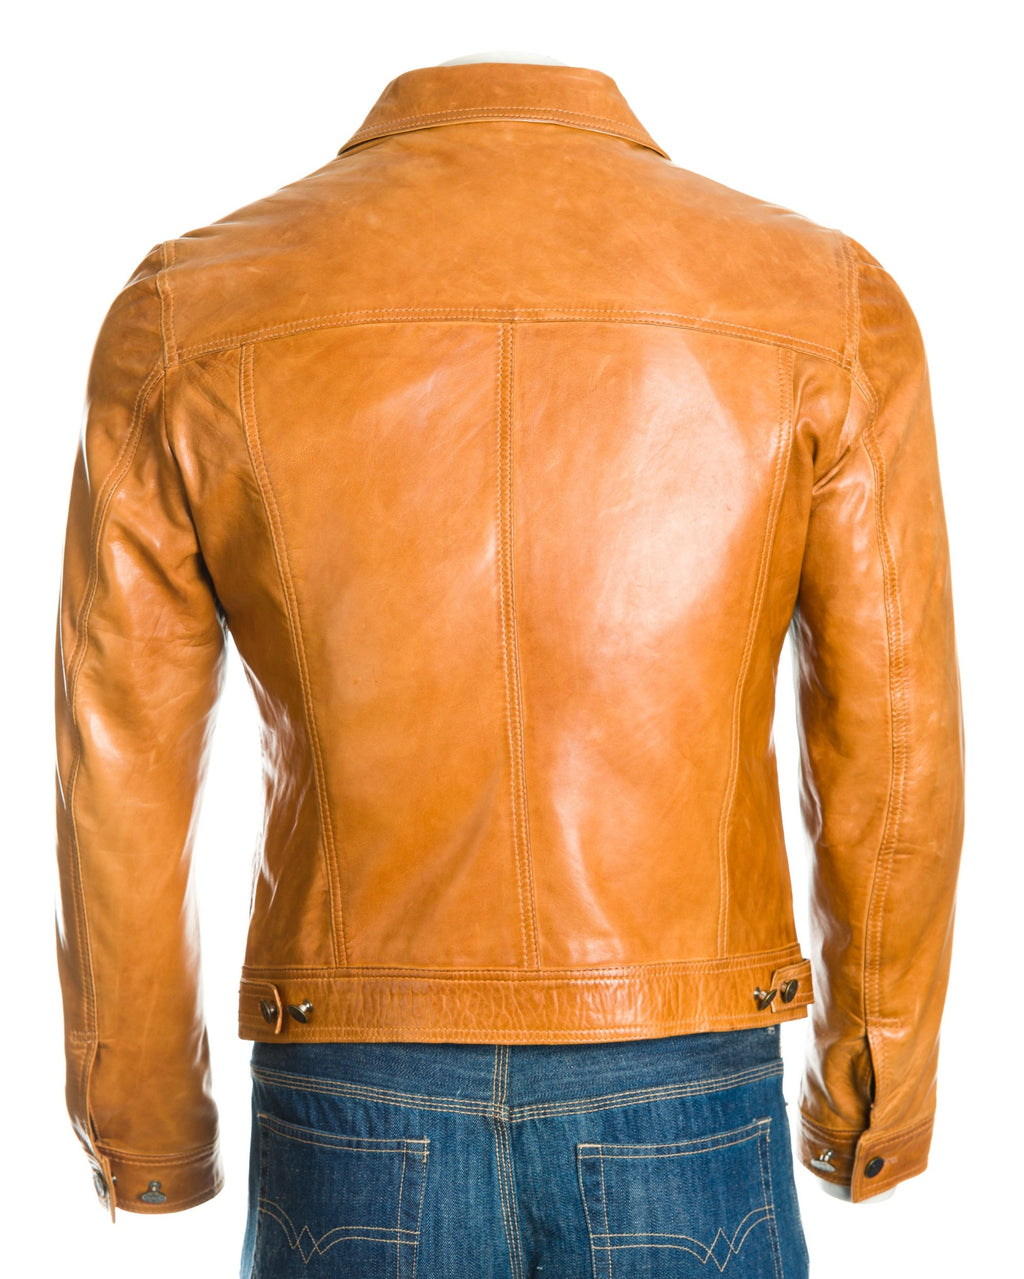 Men's Antique Tan Denim Shirt Style Leather Jacket: Antonio